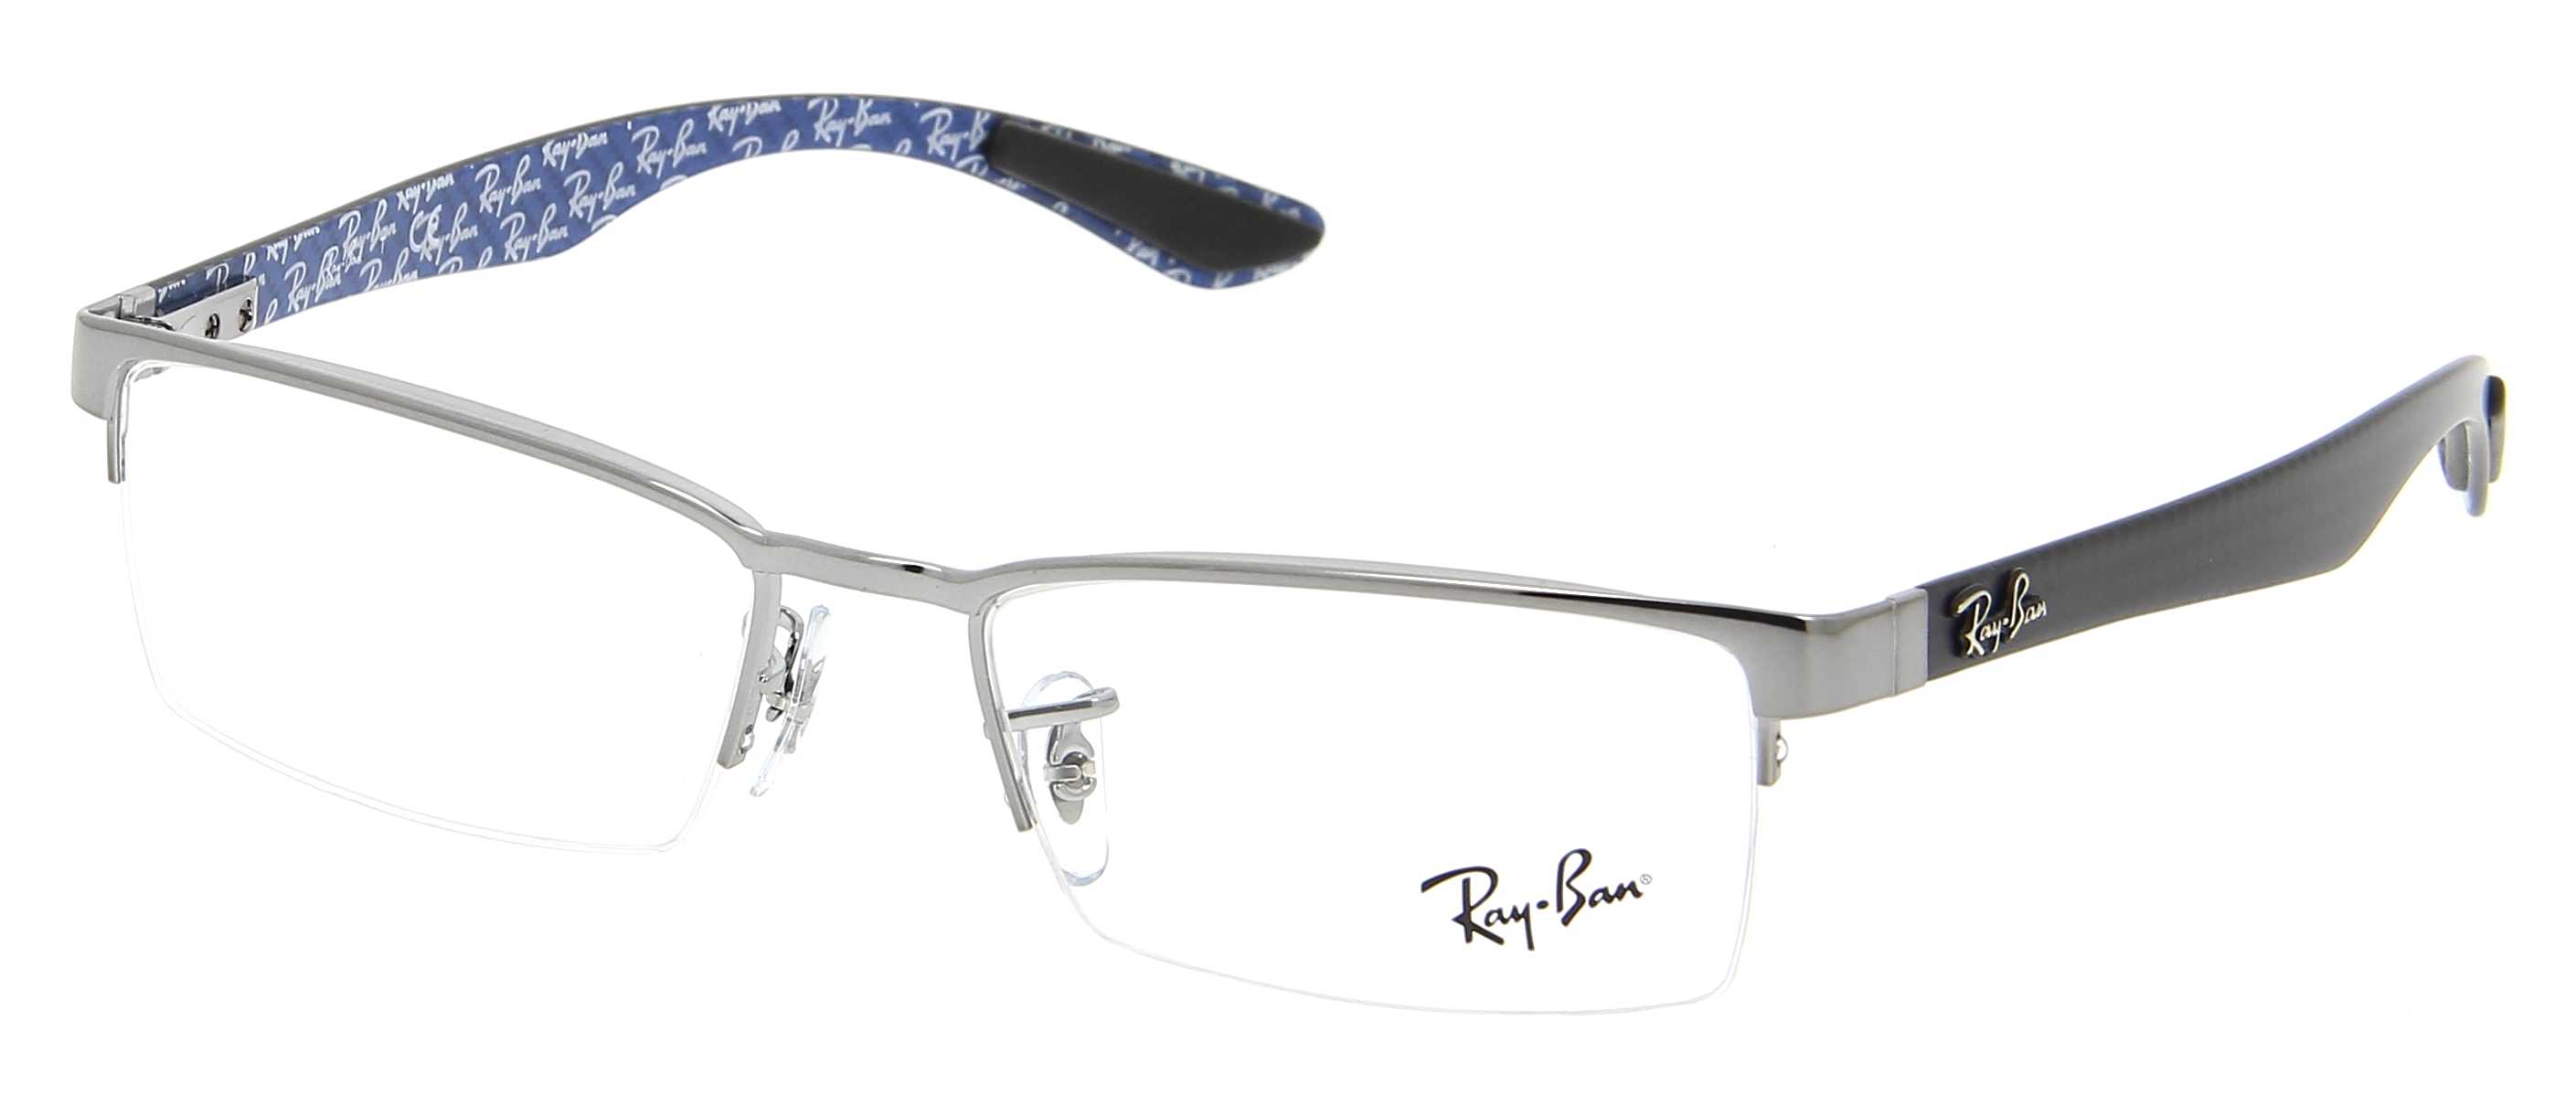 Eyeglasses Ray Ban Rx 8412 2502 54 17 Man Gun Rectangle Frames Semi Rimless Frame Classic